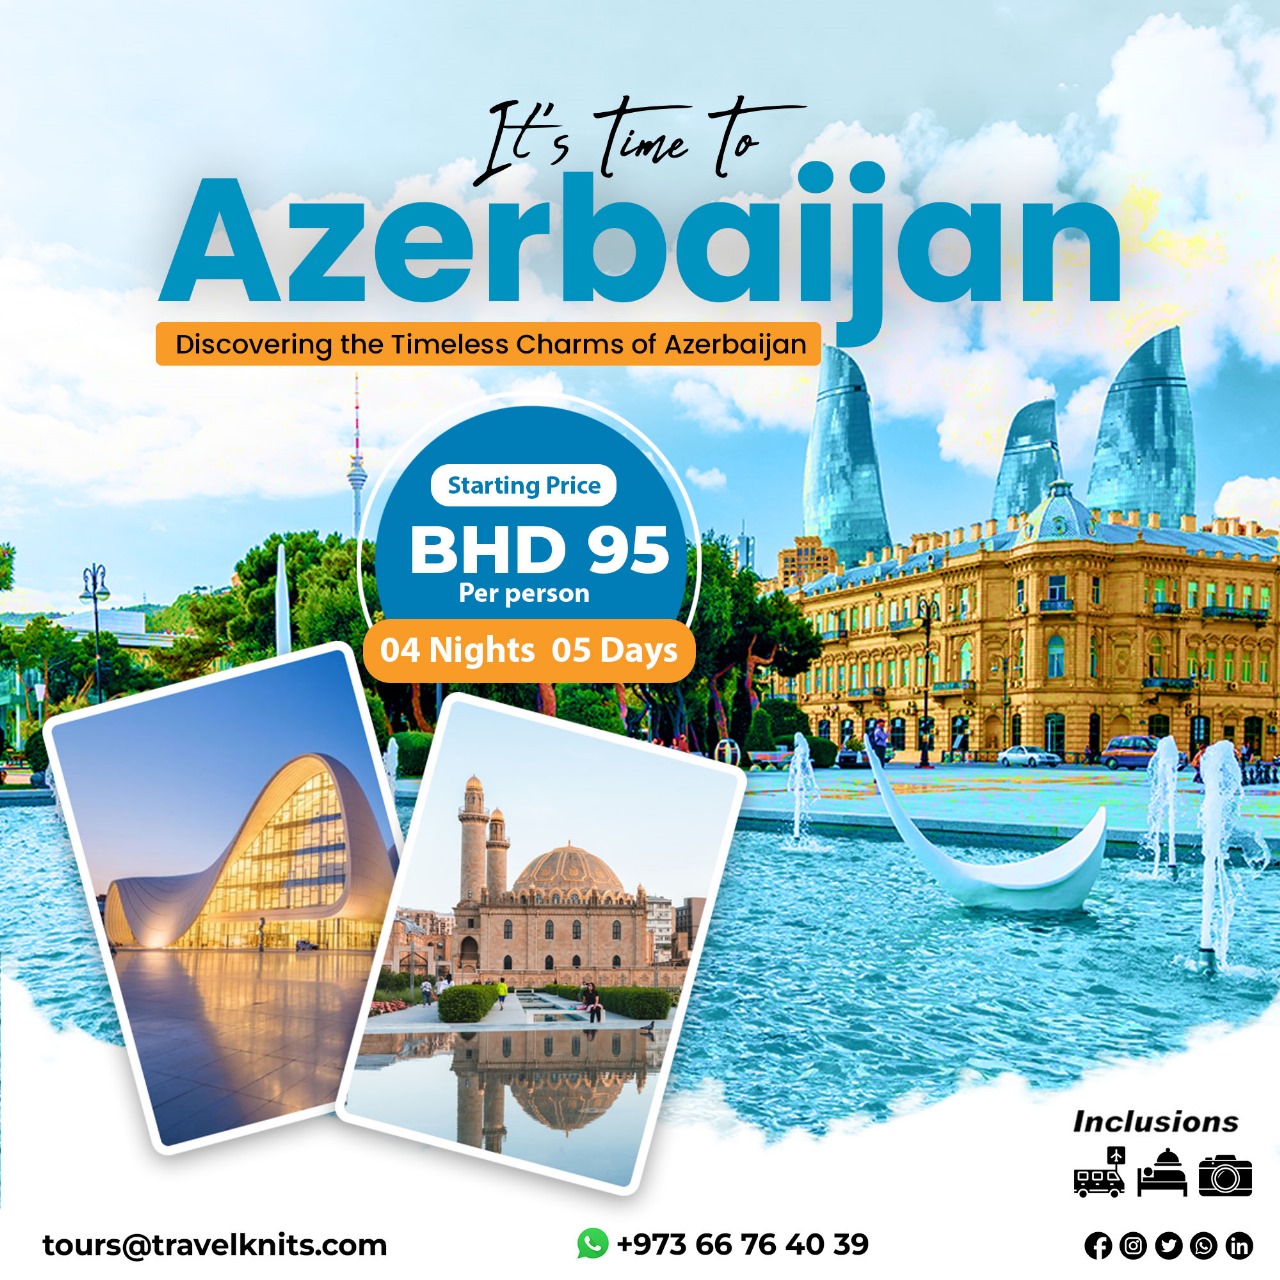 Eid holiday in Azerbaijan|AzerbaijanTour Packages - Book honeymoon ,family,adventure tour packages to Azerbaijan|Travel Knits												